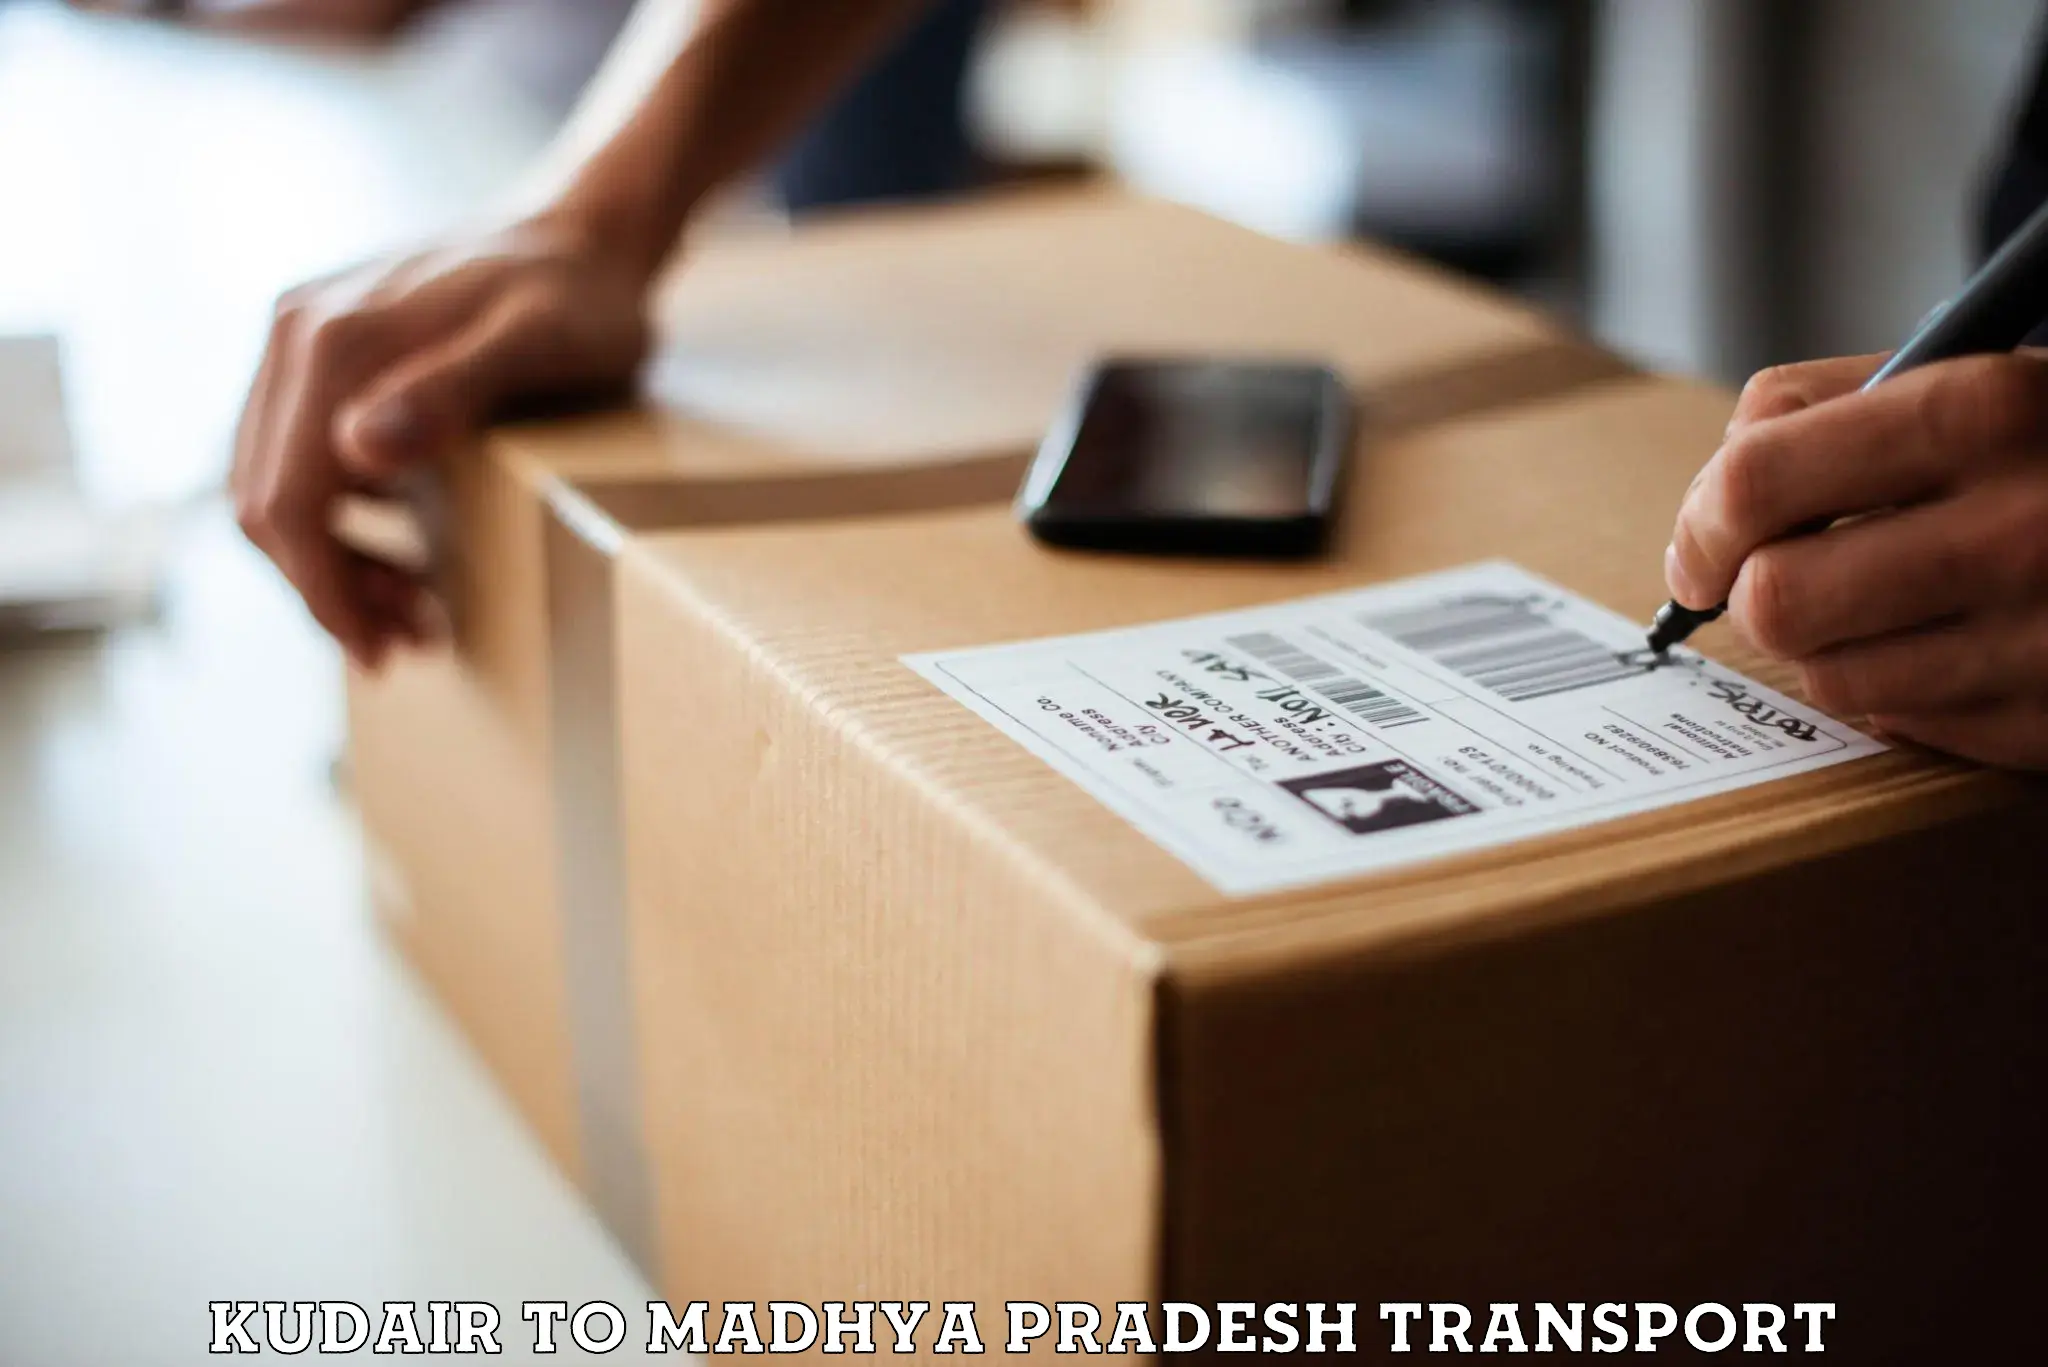 Transport shared services Kudair to Mundi